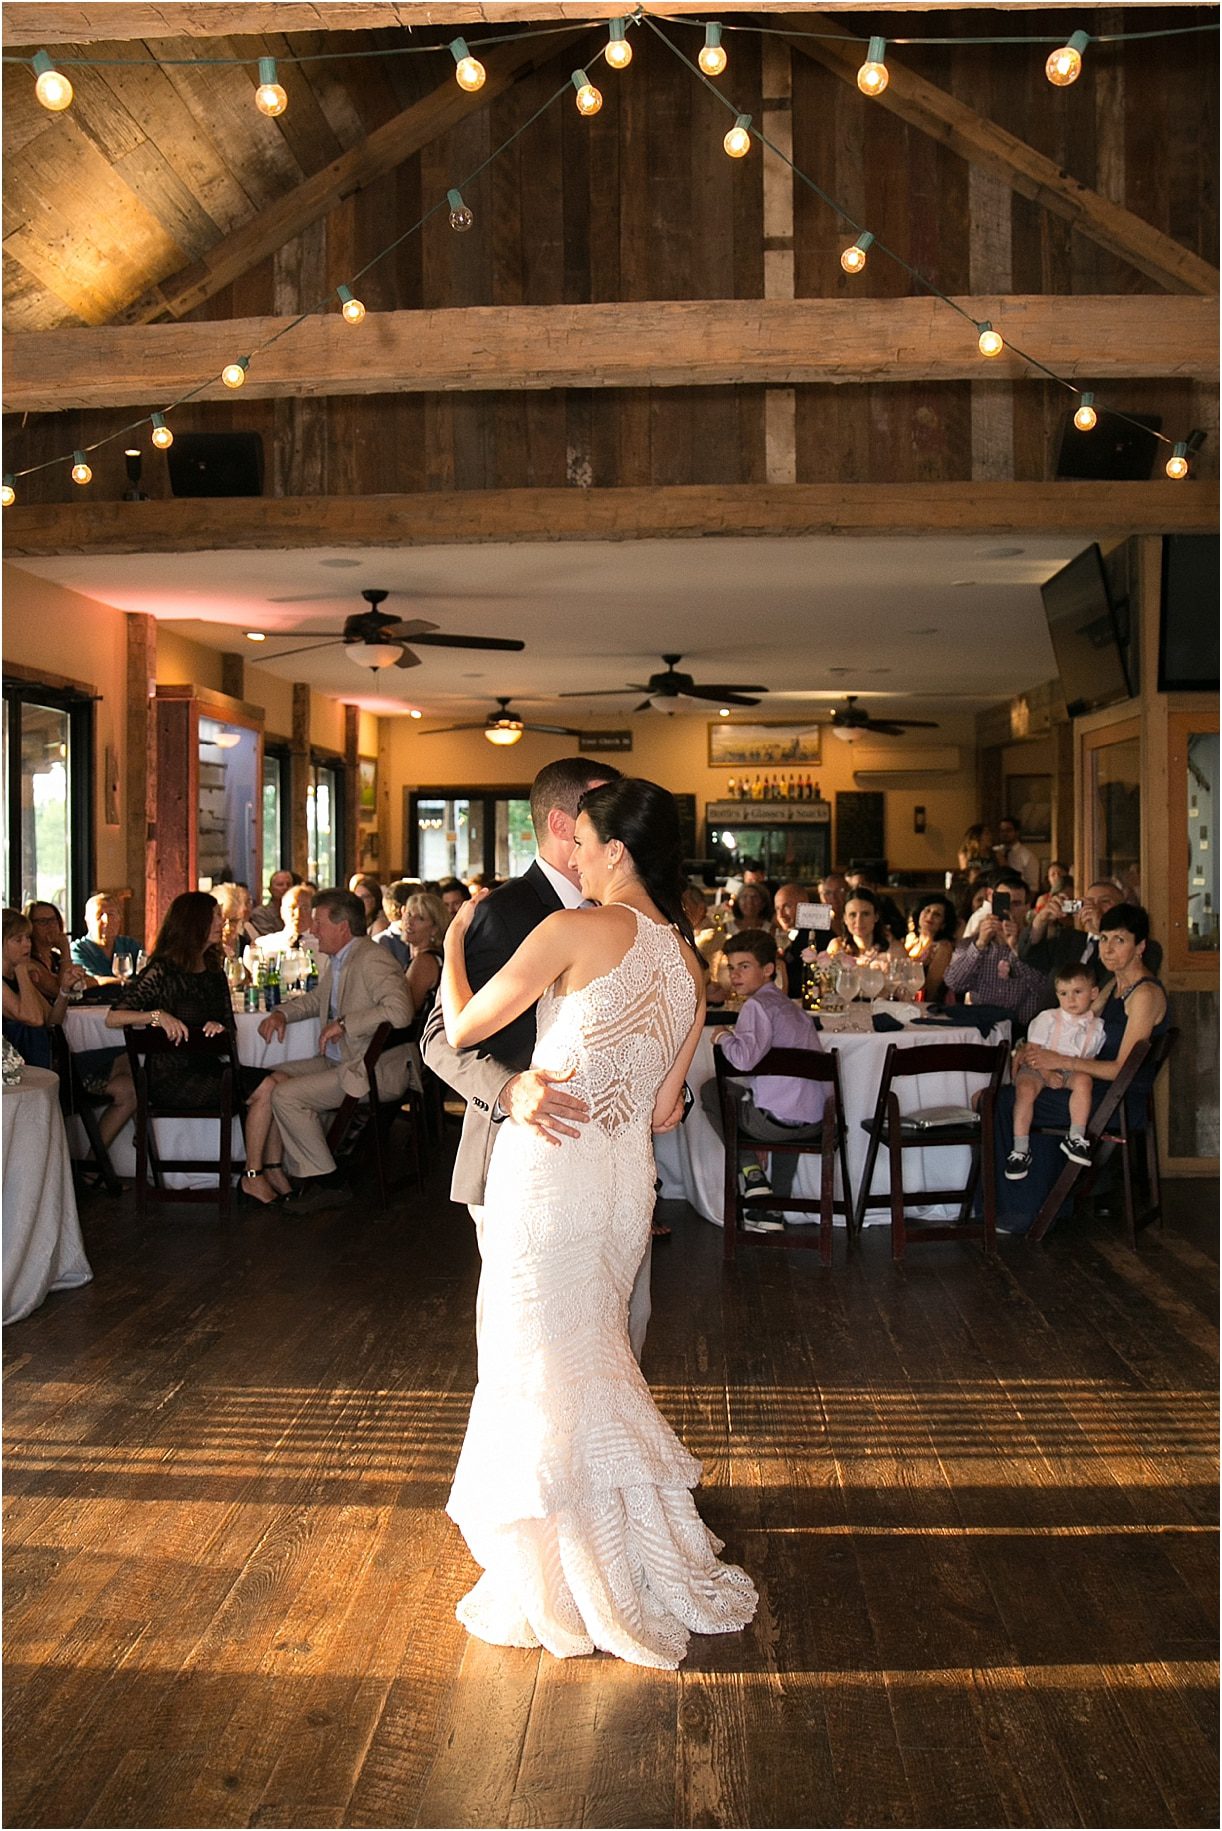 Virginia Summer Winery Wedding | Hill City Bride Wedding Blog